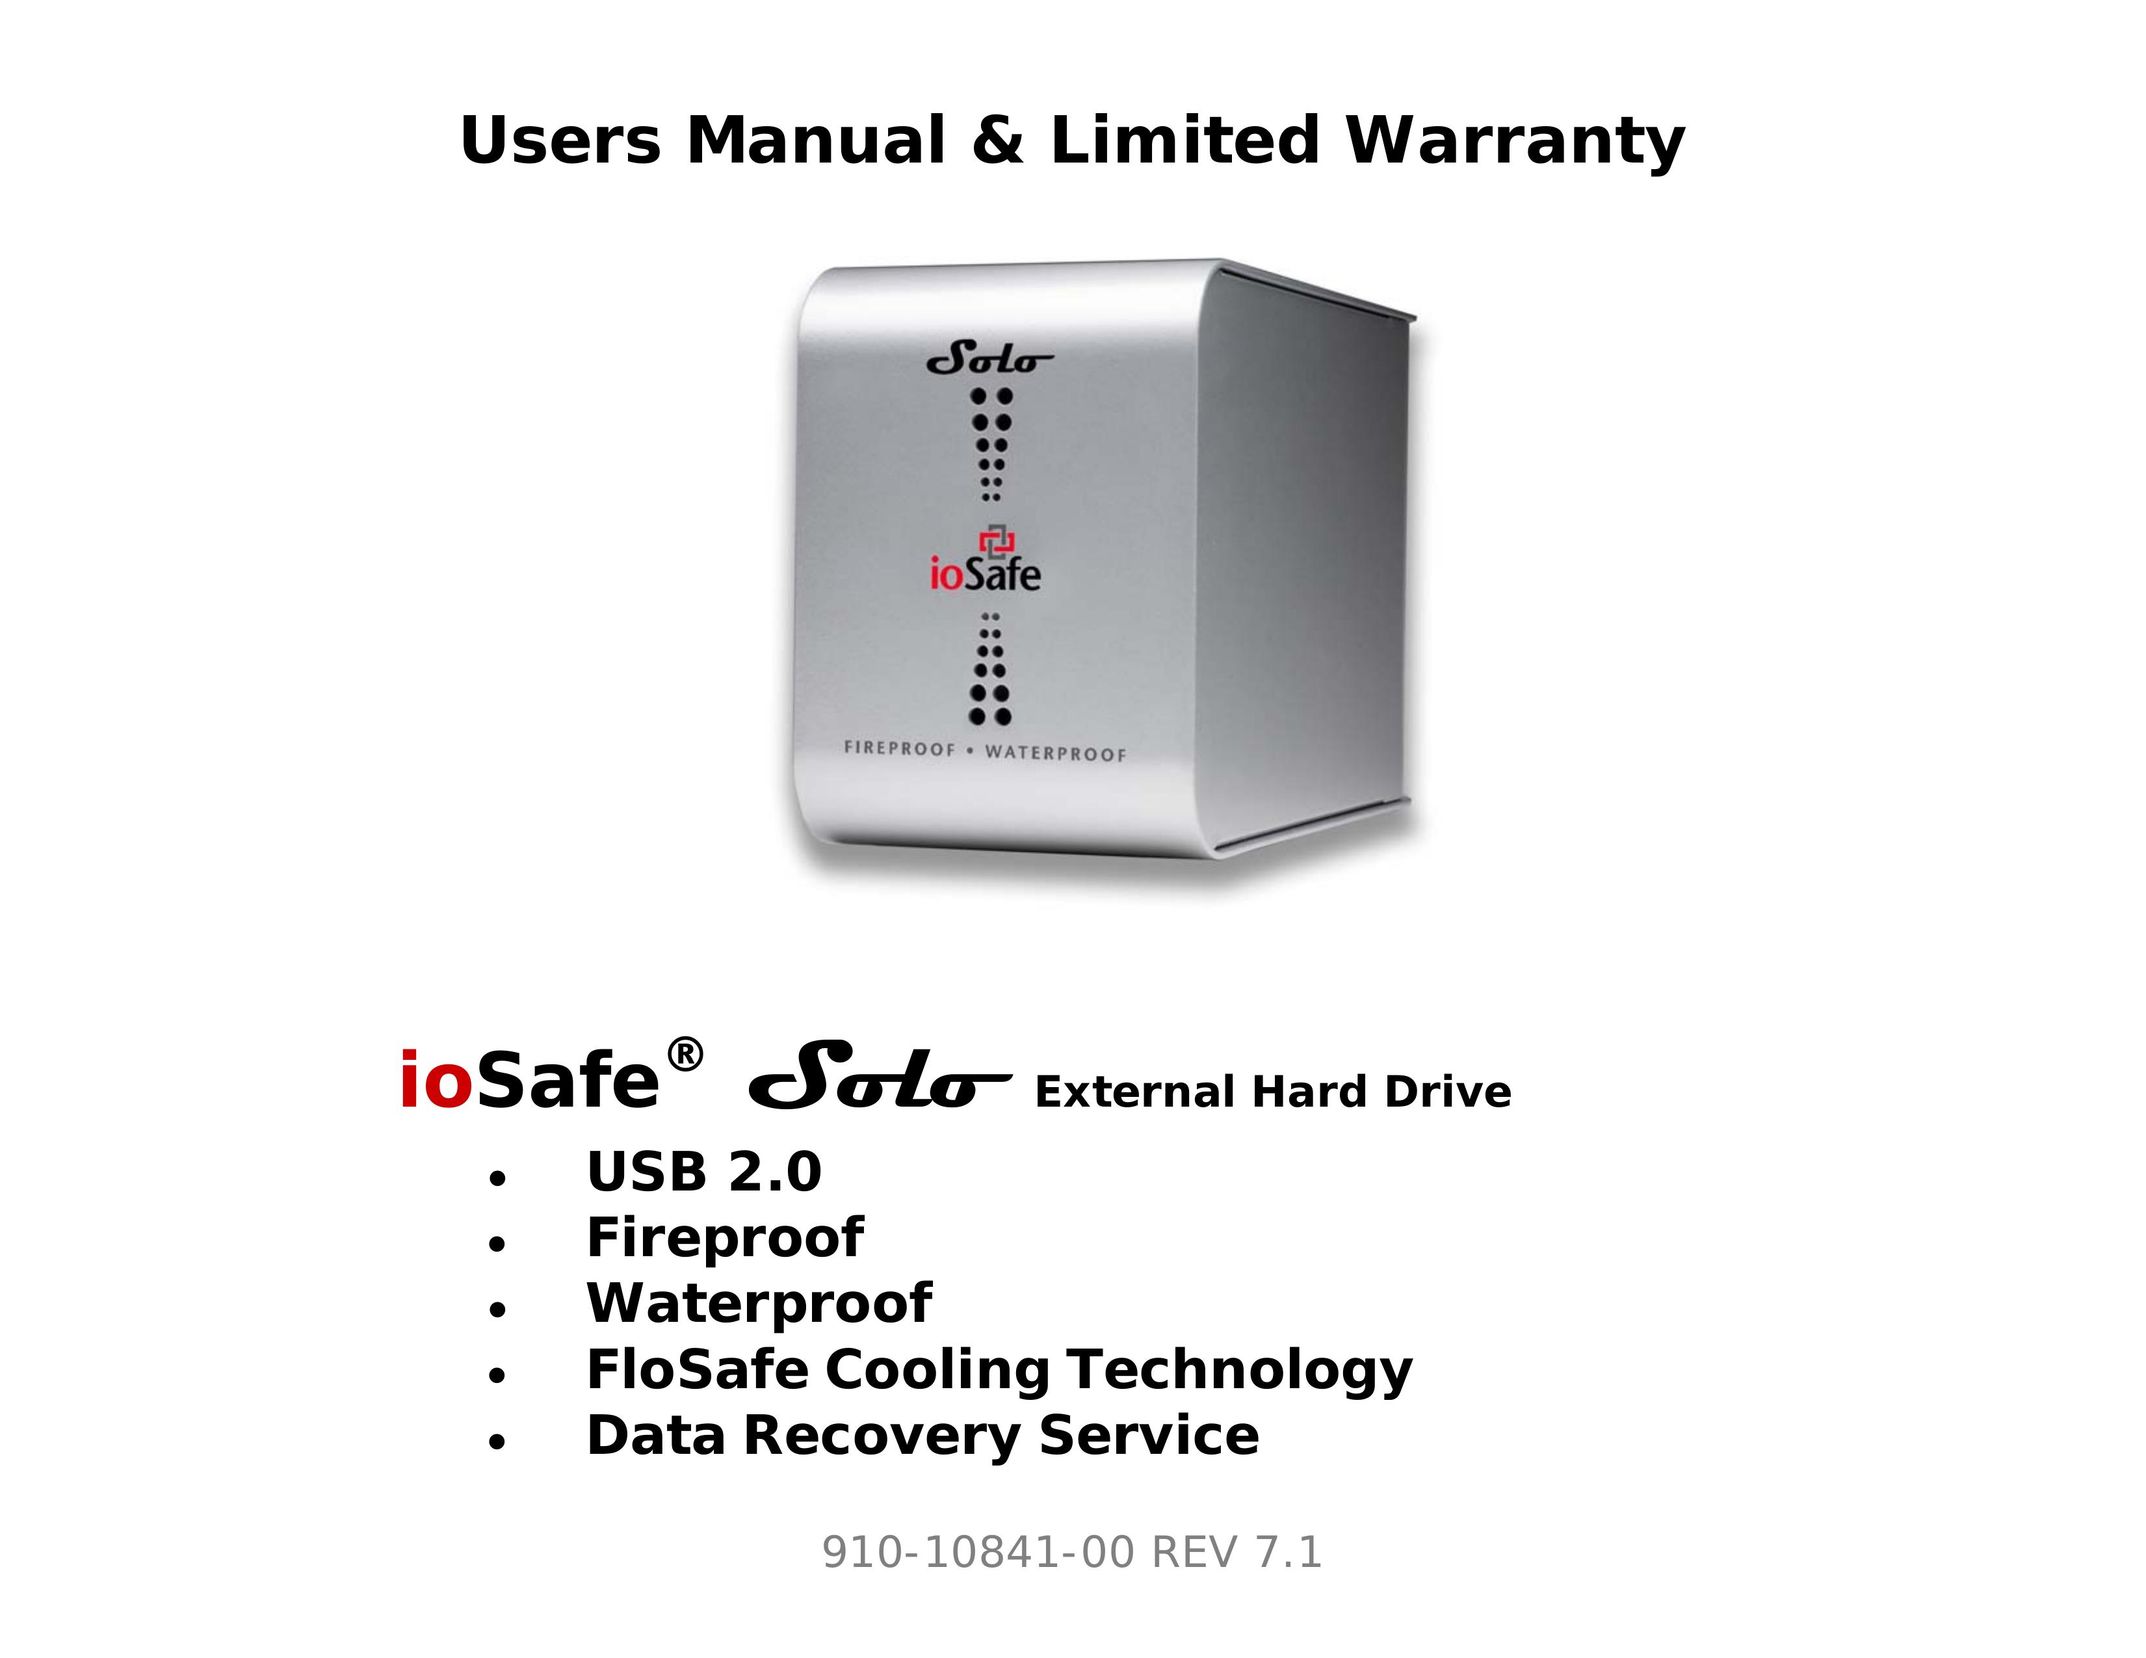 ioSafe Solo Computer Drive User Manual